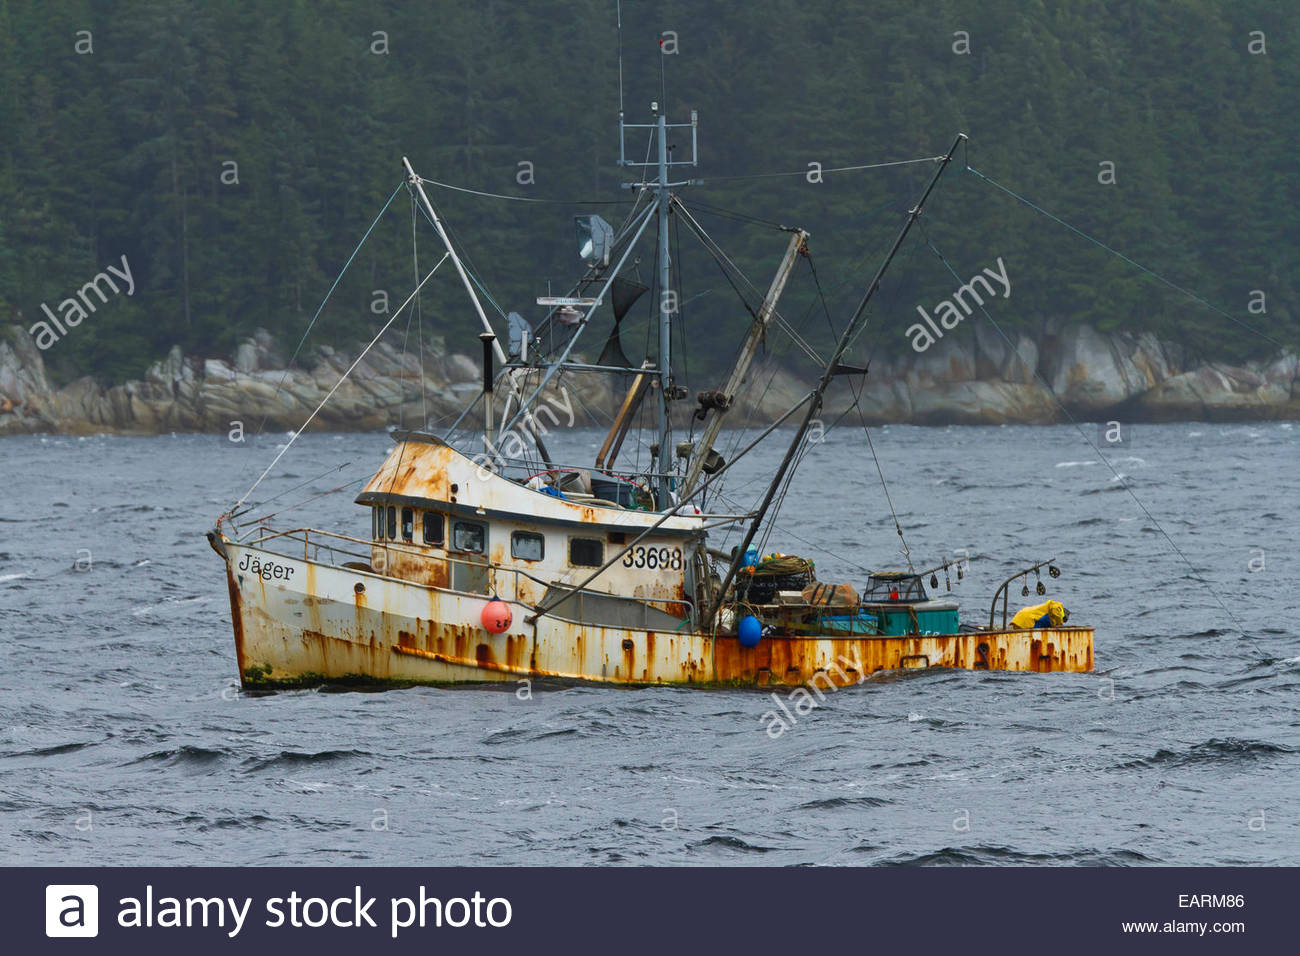 Rusty fishing boat on the Chatham Strait. Stock Photo